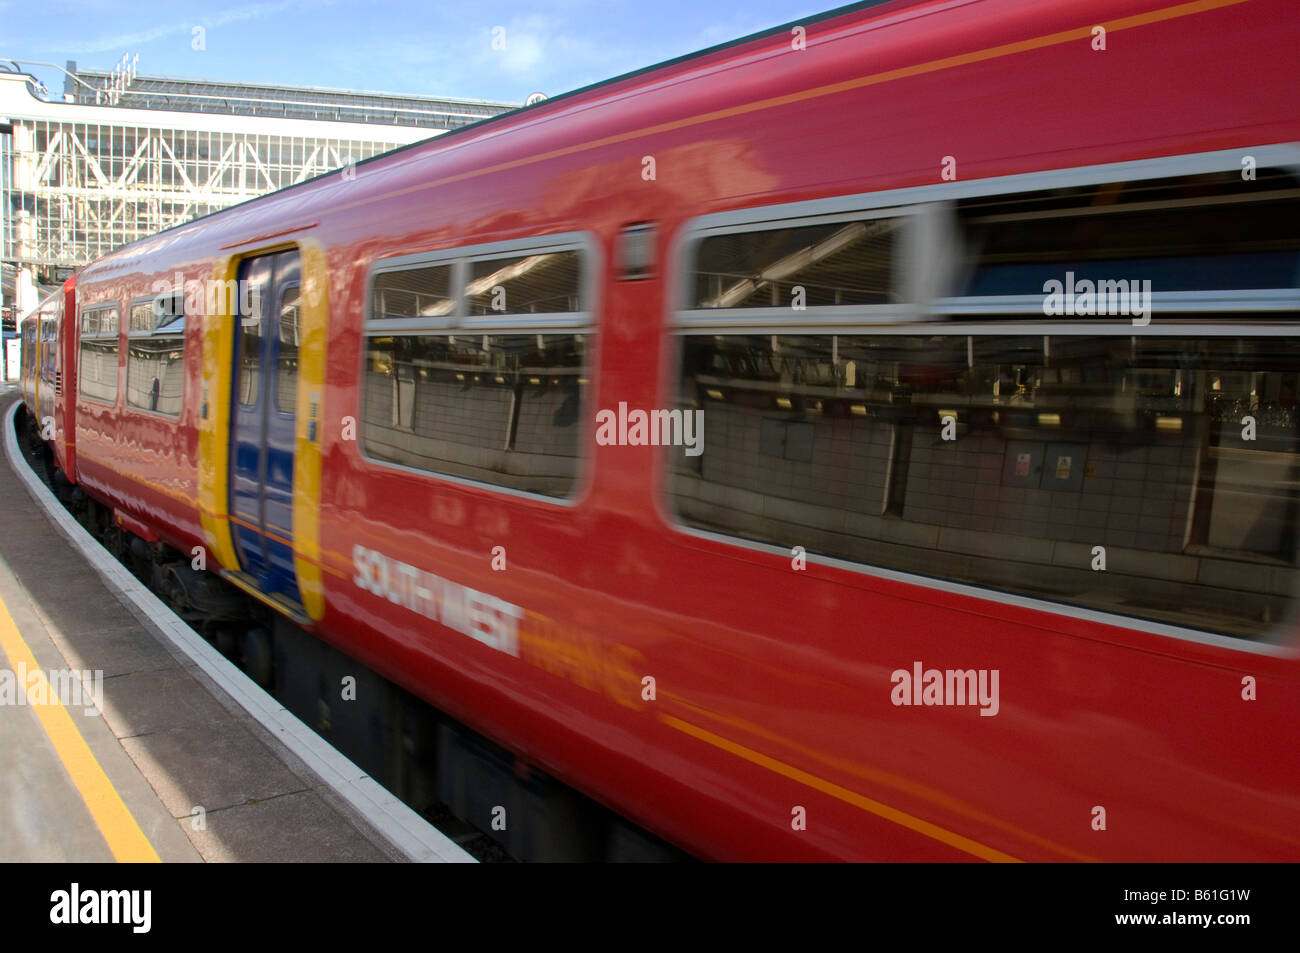 Einem fahrenden Zug in London Waterloo Bahnhof Statio, London, UK Stockfoto